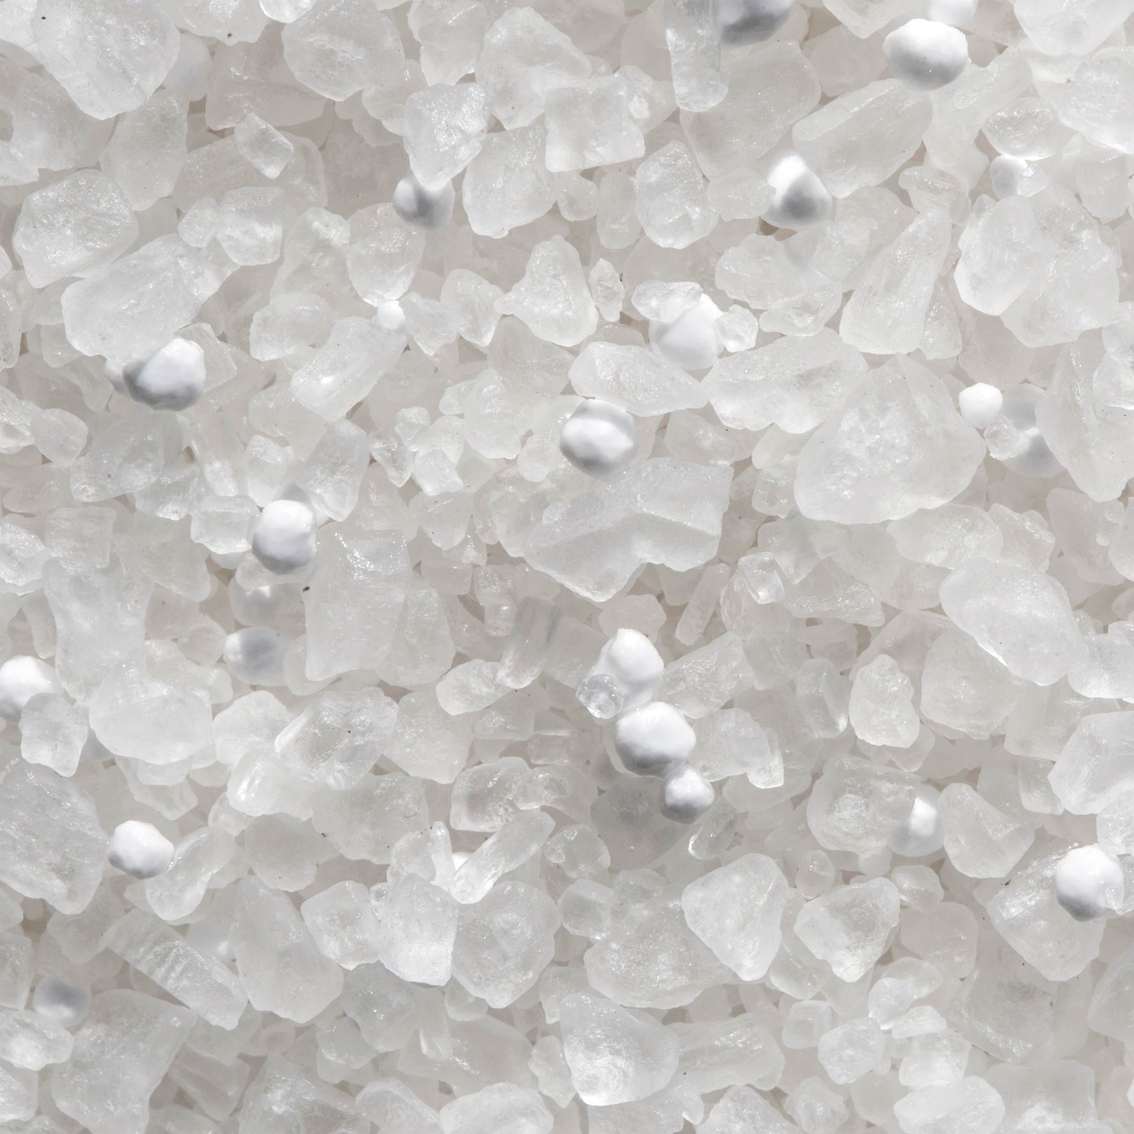 Snow Joe MELT 25 lb. Resealable Bag Calcium Chloride Crystals Ice Melter - Image 2 of 2